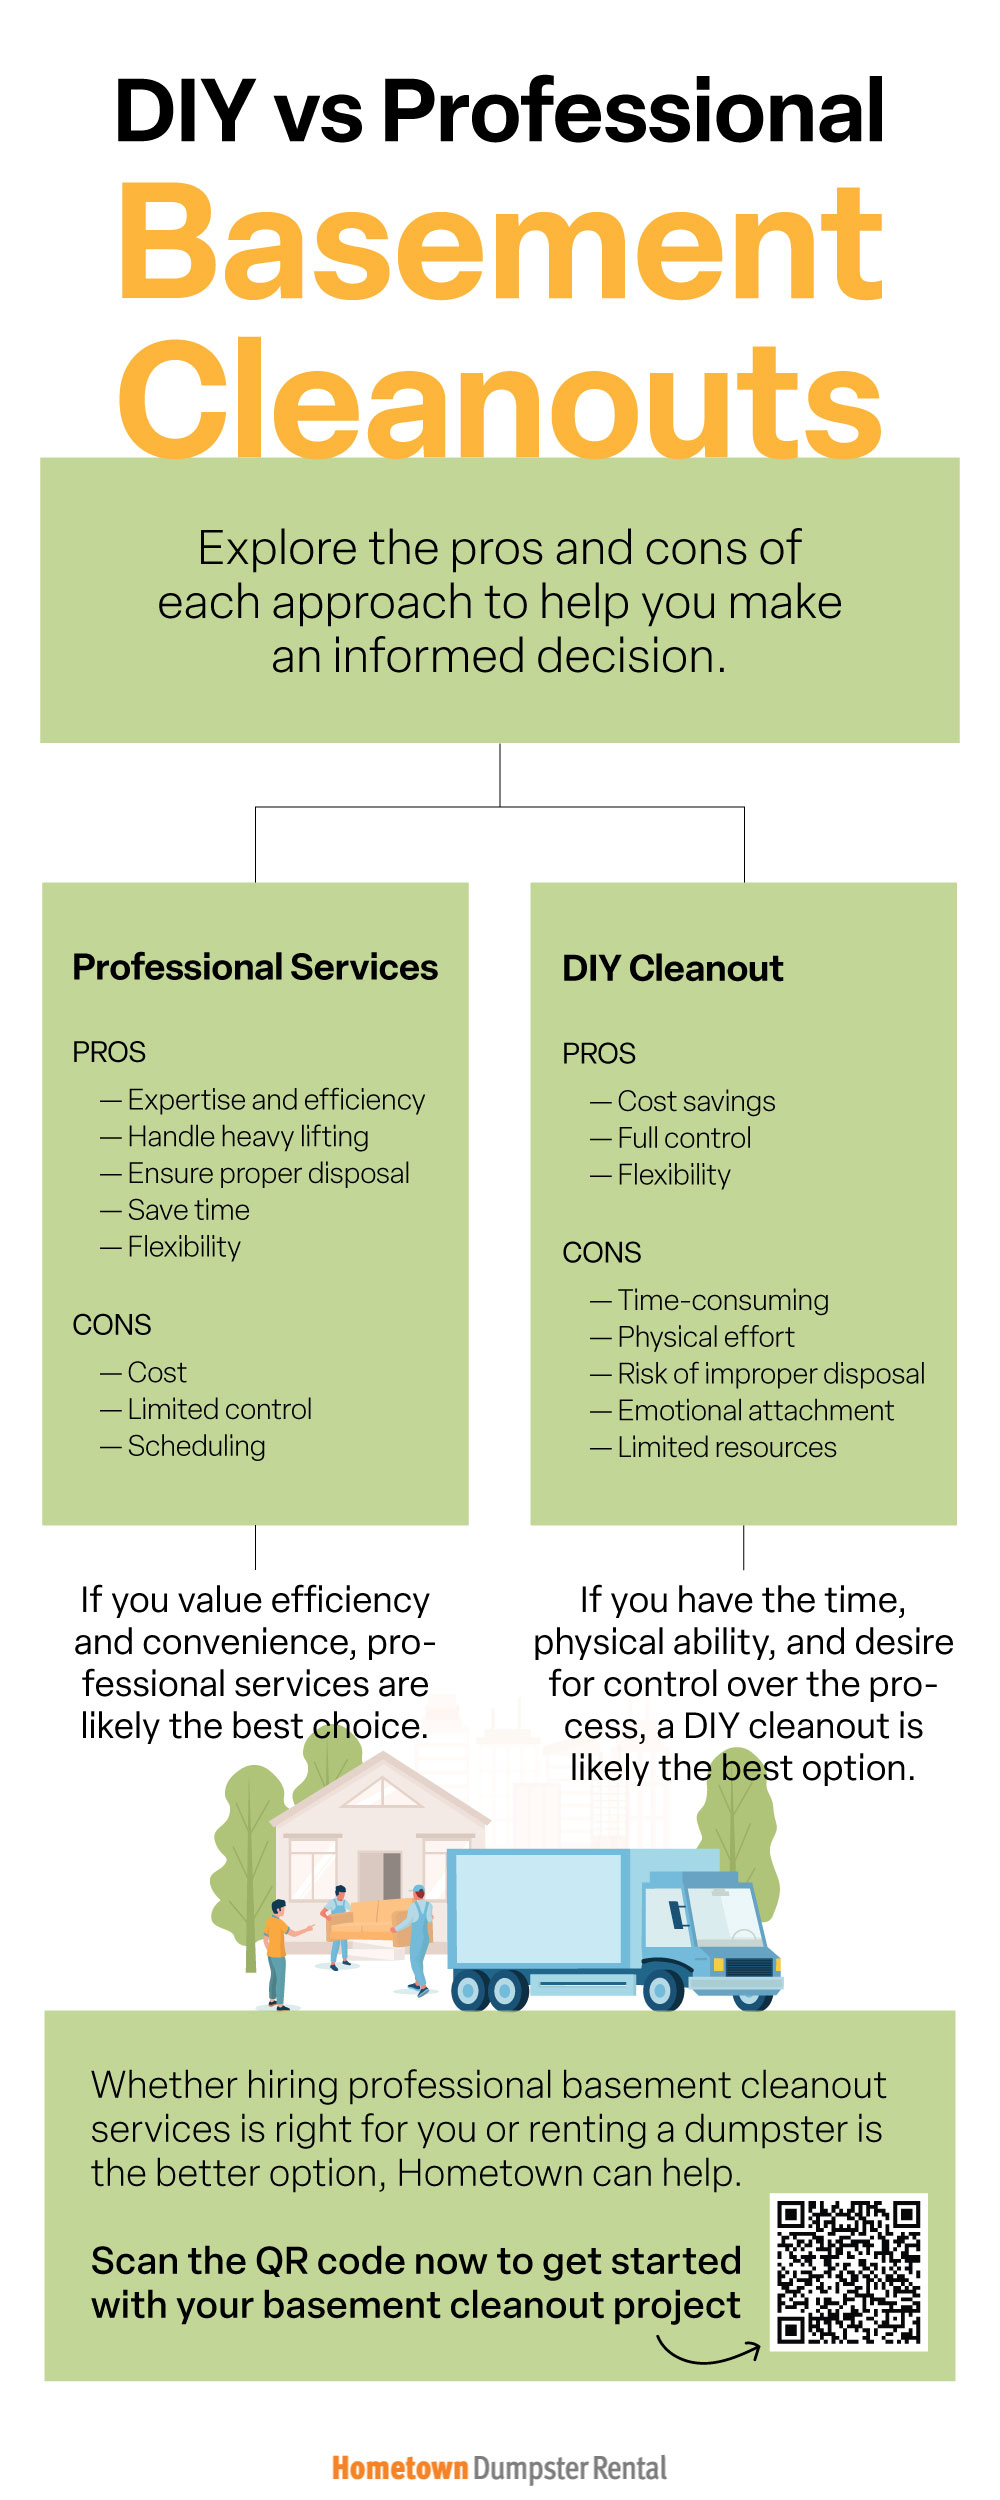 DIY vs professional basement cleanout infographic